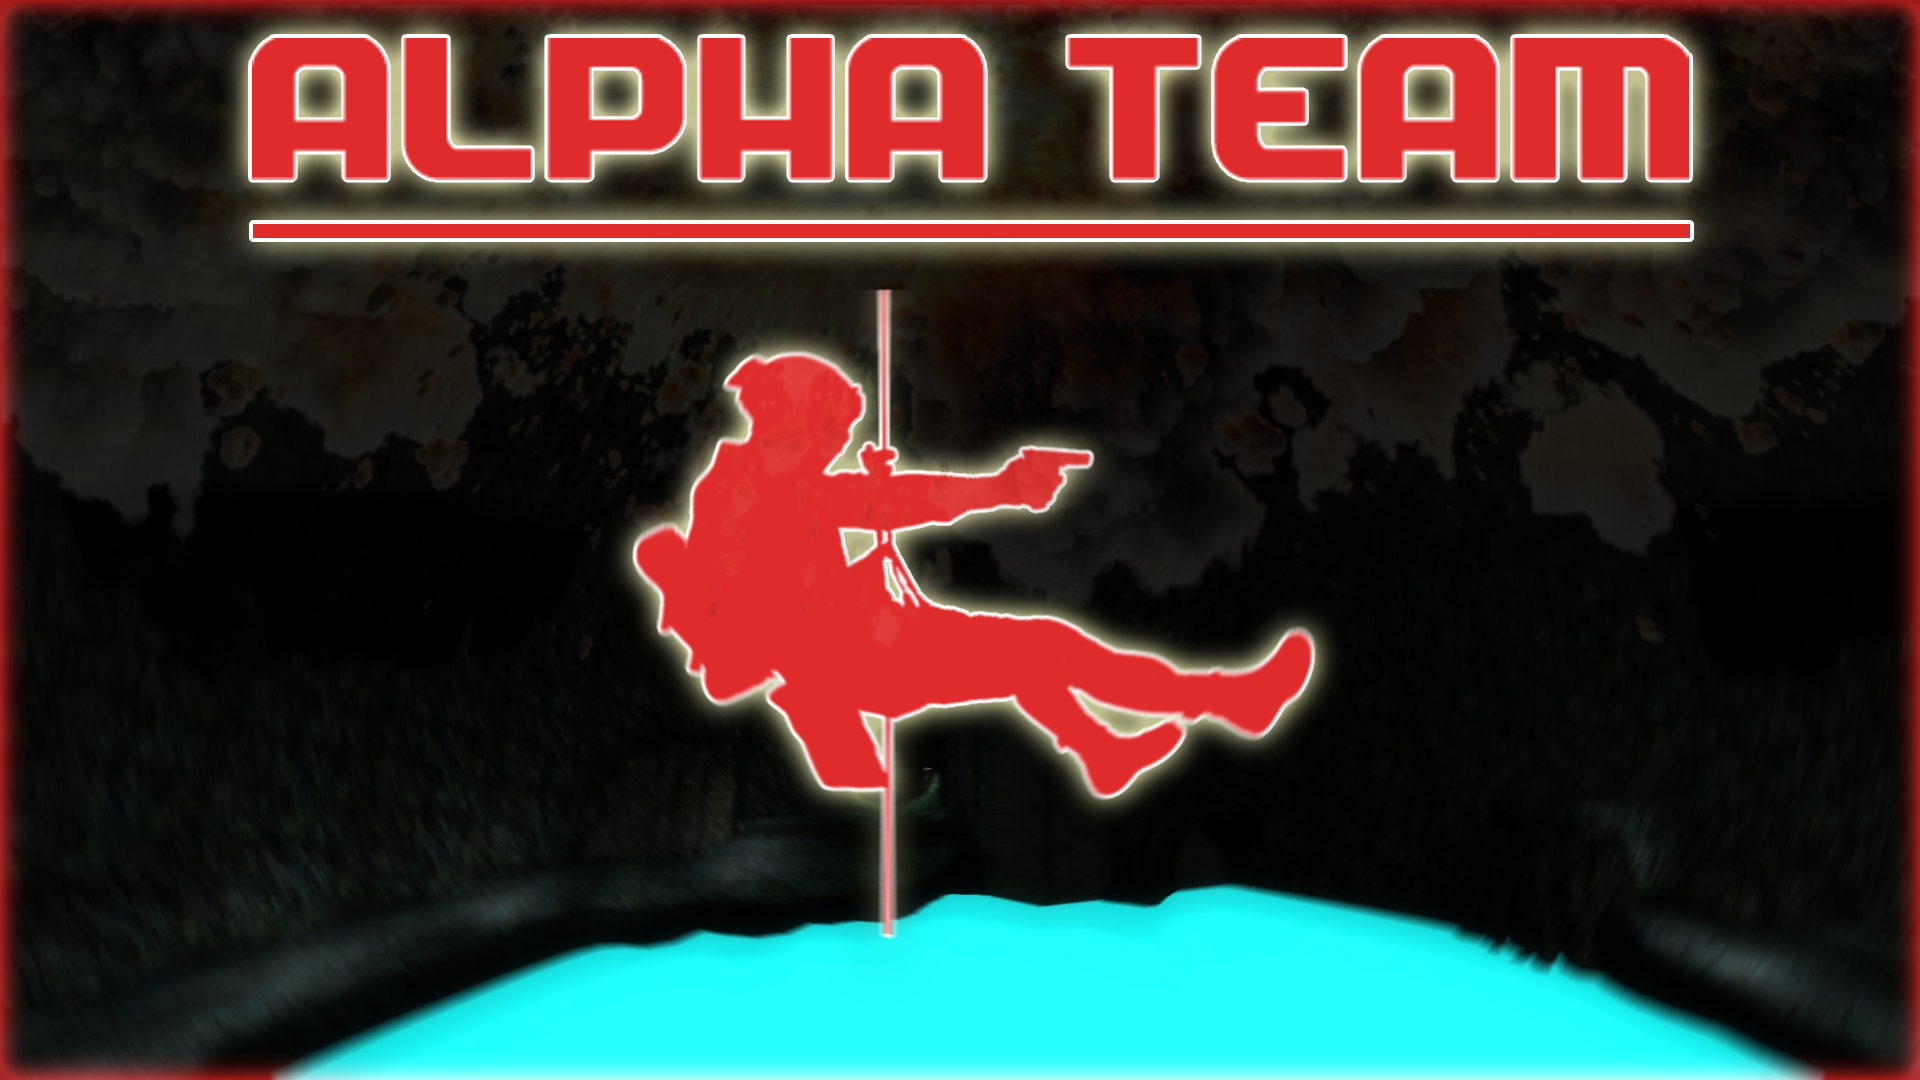 More information about "CSS Zombie Escape Mini-Event #166 - Alpha Team"